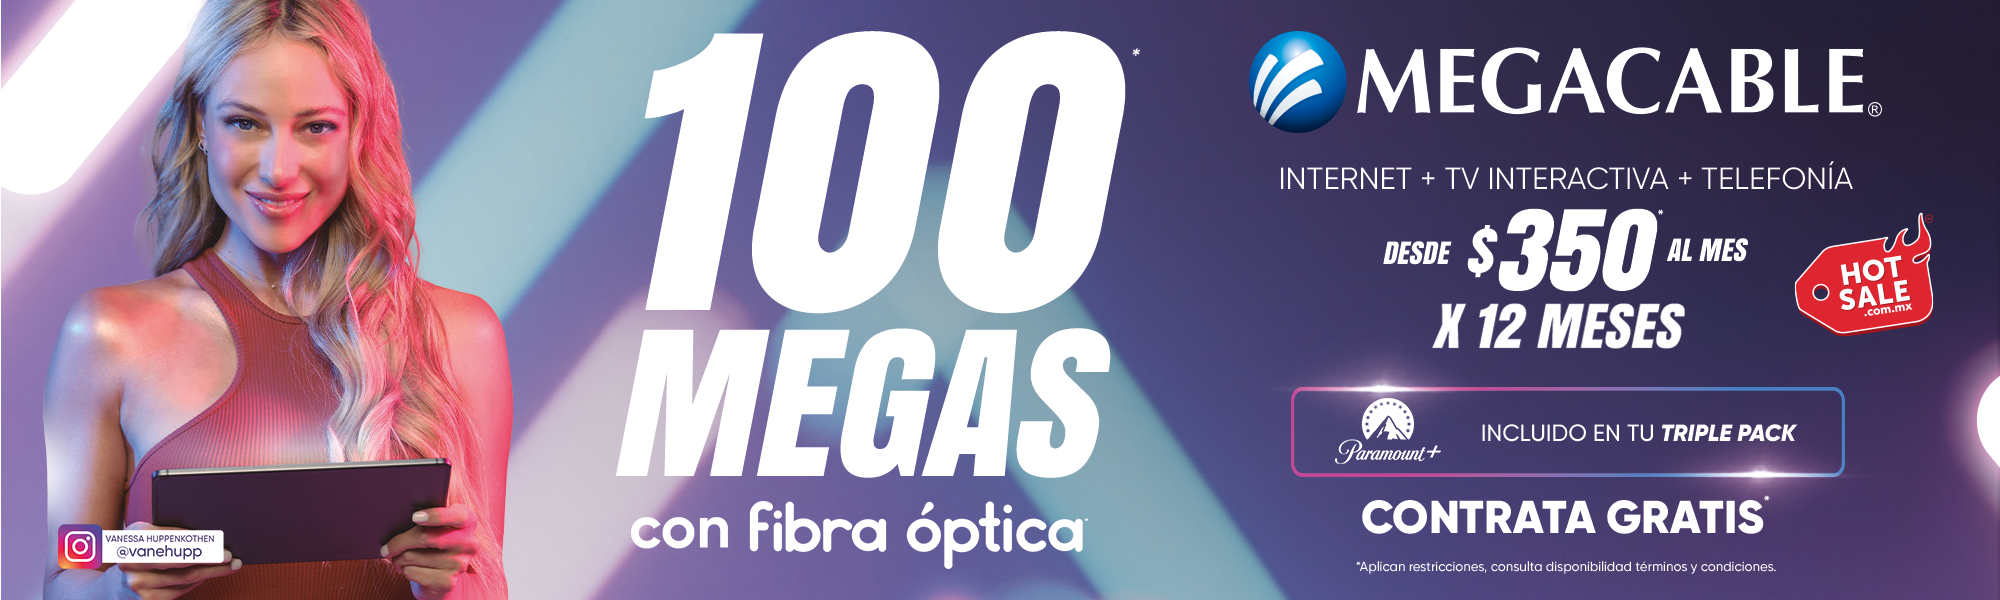 100 MEGAS_350